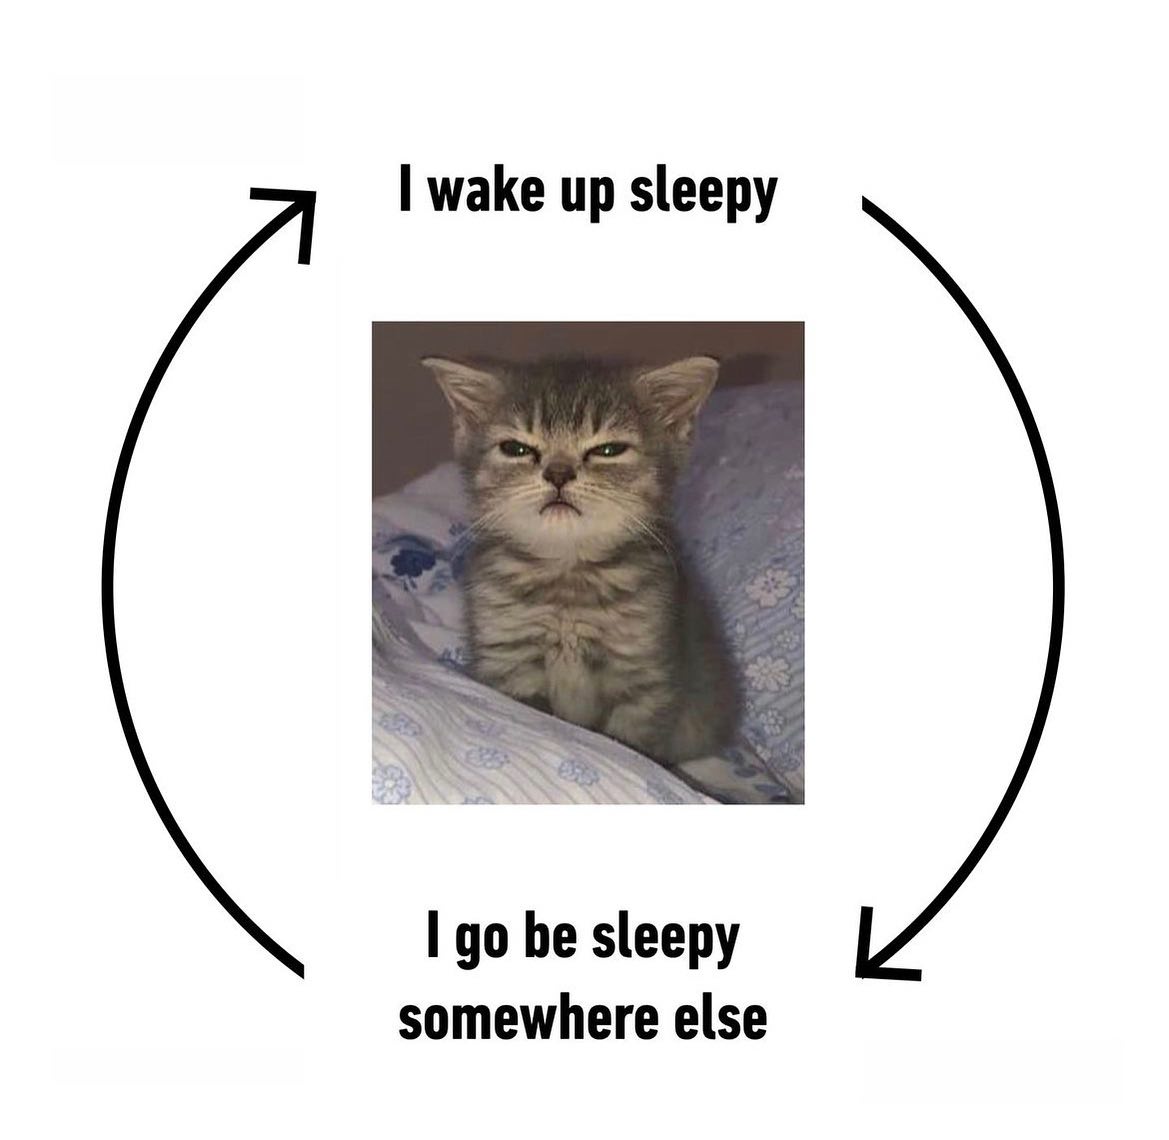 😹😹😹
.
.
.
.
.
.
#FunnyMemes #CatMemes #FunnyCatMemes #CatParent #CatParents #CatOwner #PetOwner #PetOwners #CatLover #CatLovers #FelineLovers #PetLovers #CatOwners #PetMemes #FunnyPetMemes #CatCompanion #CatObsessed #CatObsession #Sleepy #SleepyCat #CatSleep #CatSleeping